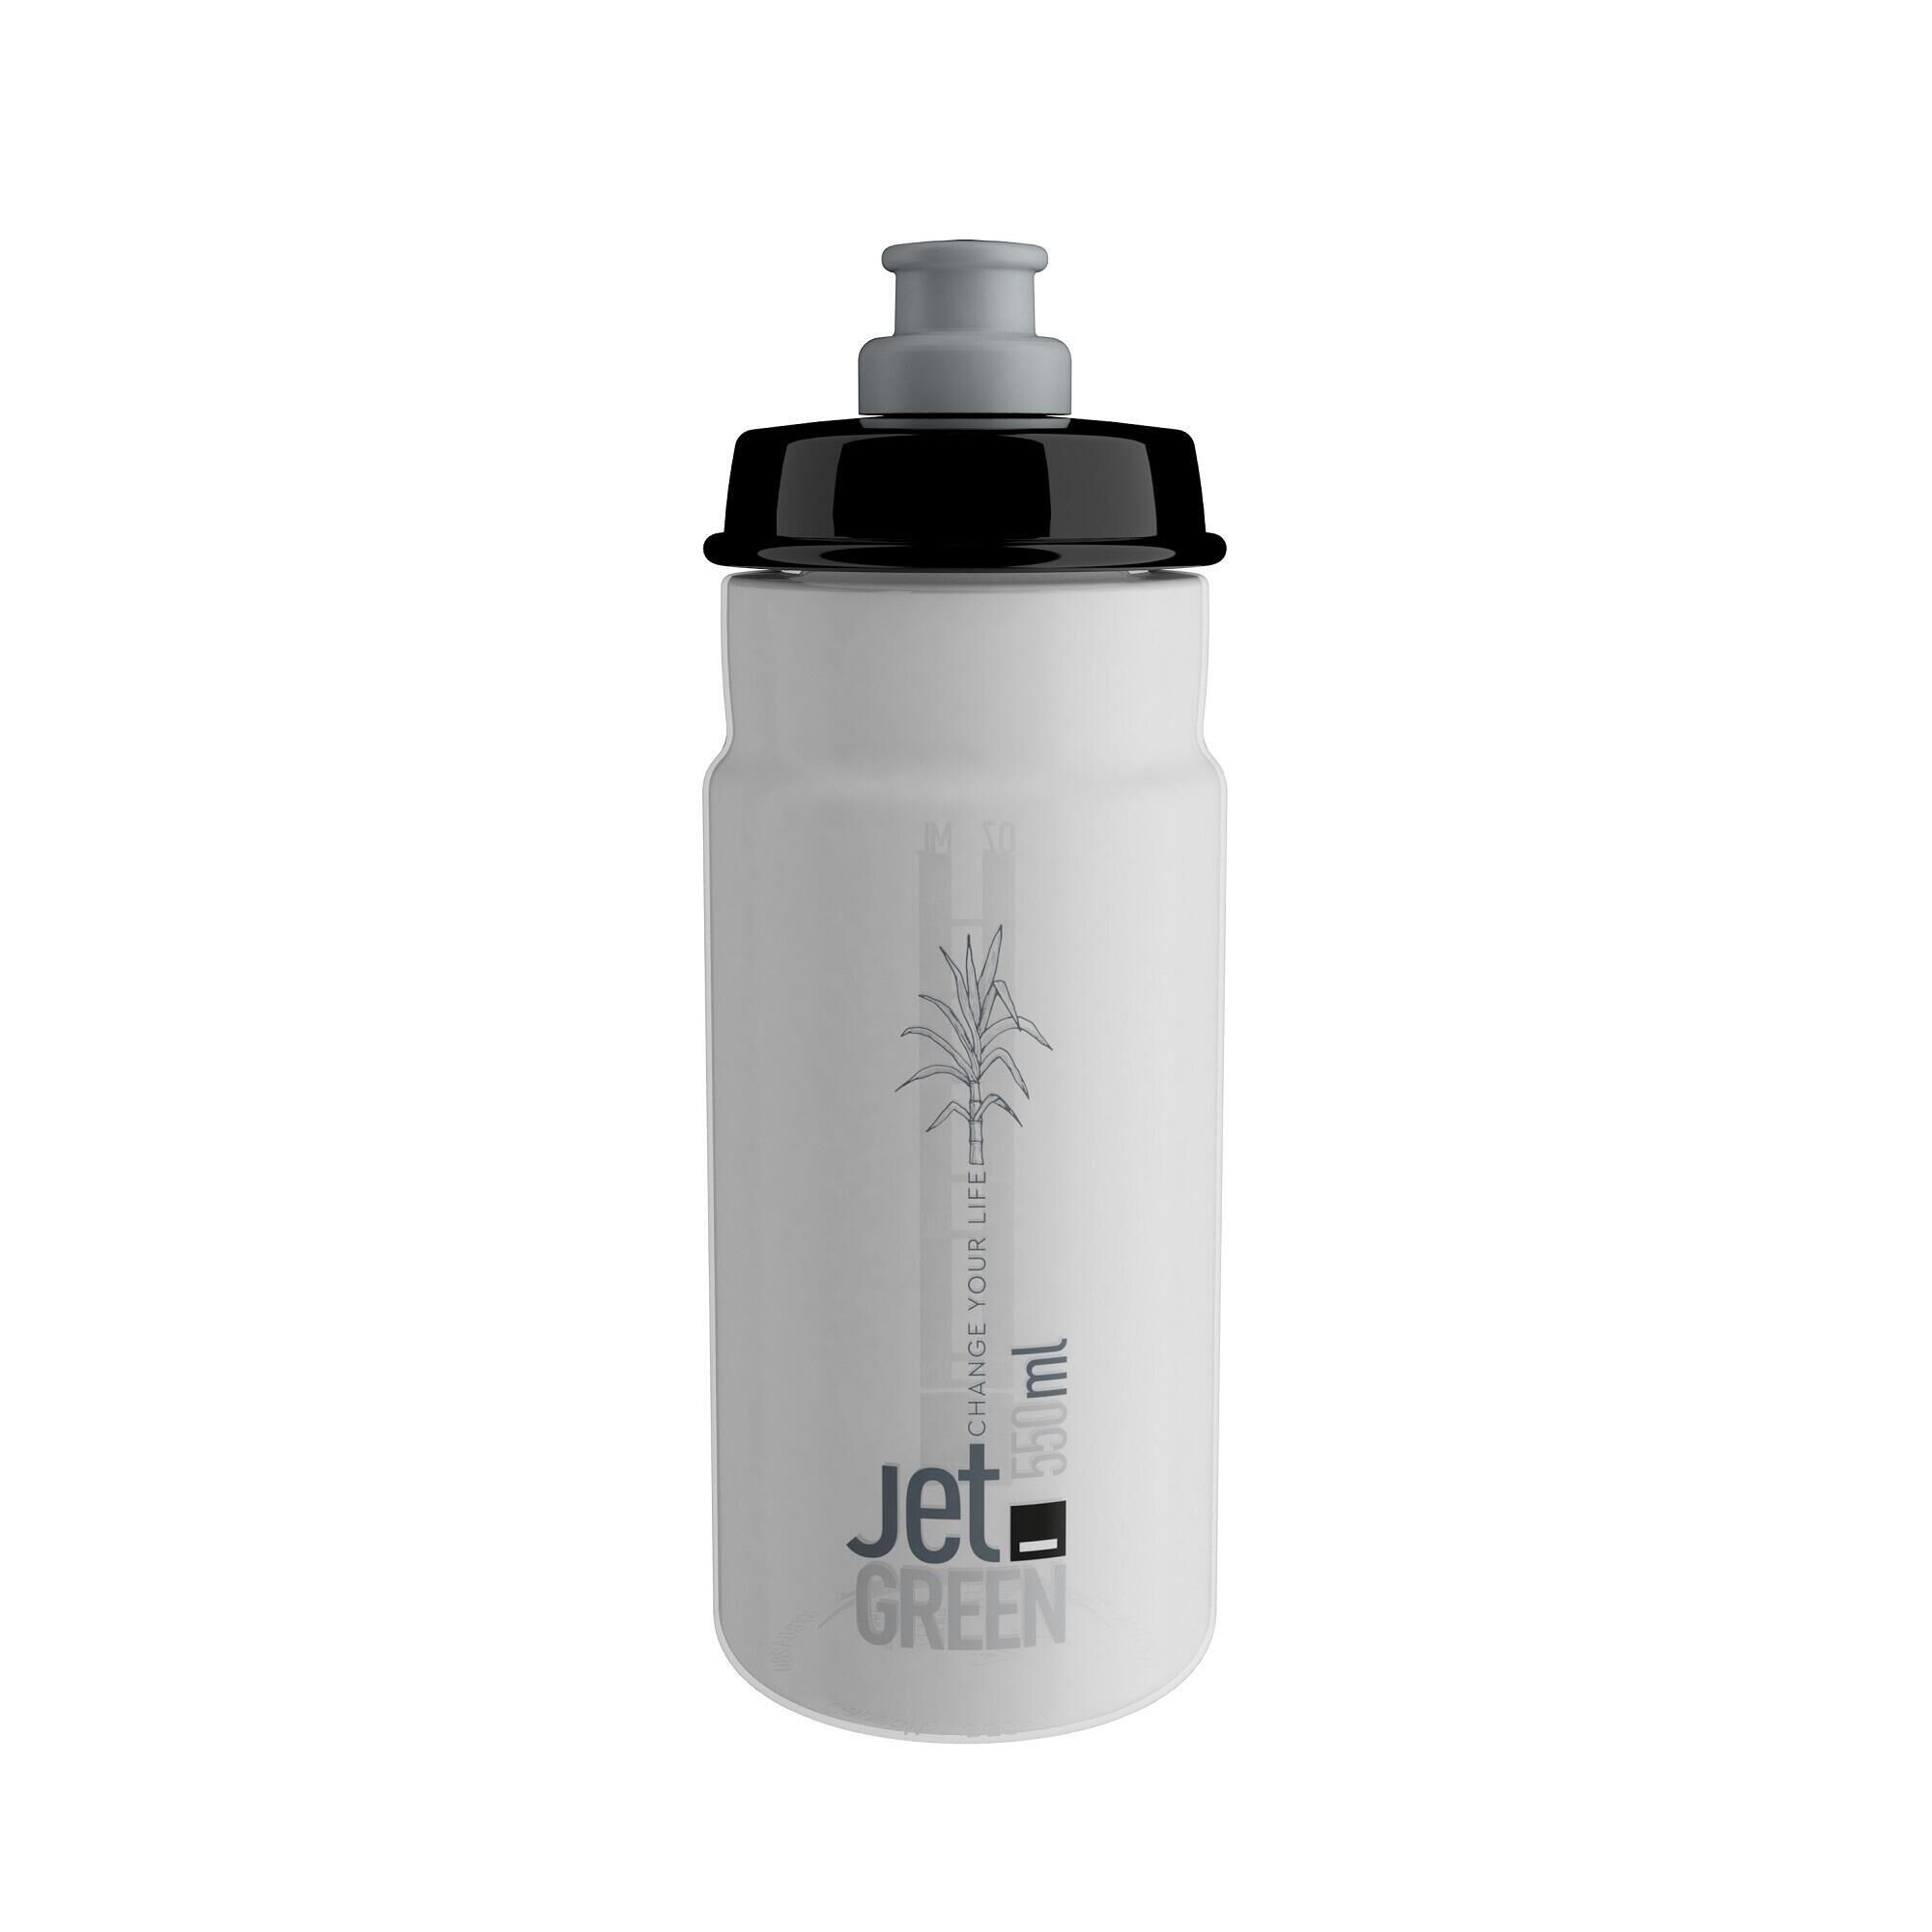 ELITE Refurbished Cycling Water Bottle 550mL Jet Green - A Grade